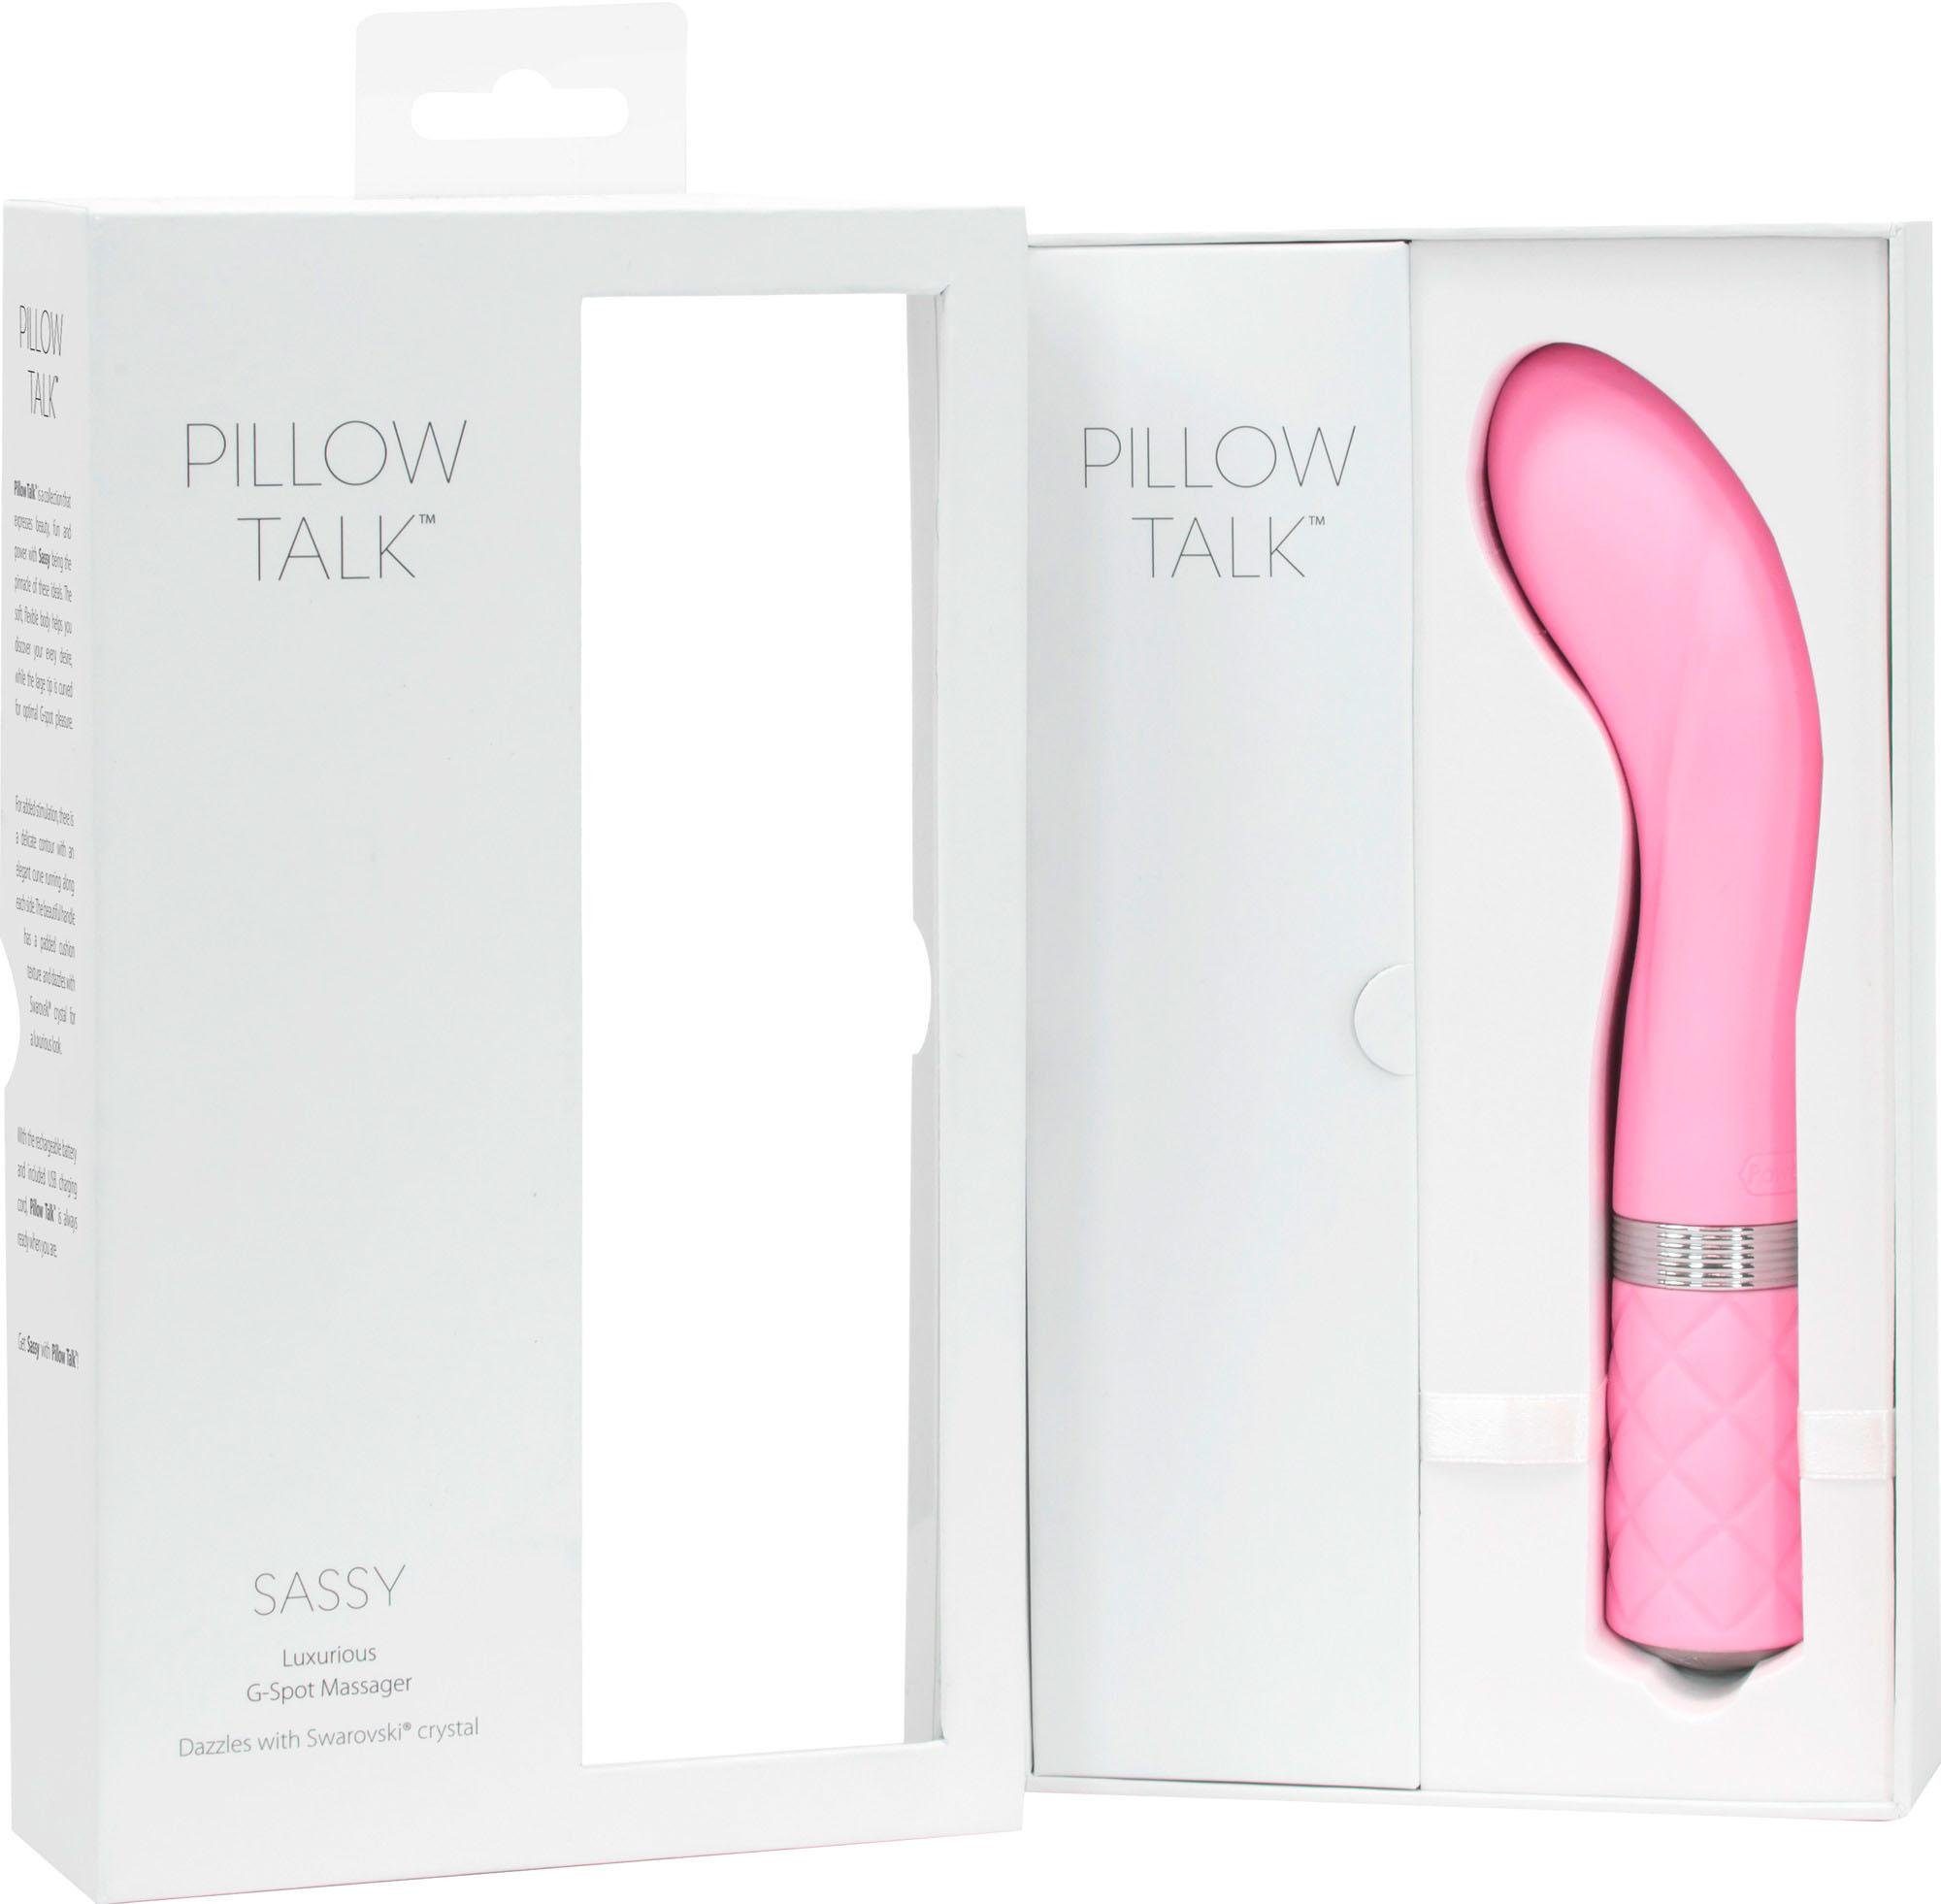 Pillow Talk G-Punkt-Vibrator Pillow stufenlose Sassy, pink Vibration